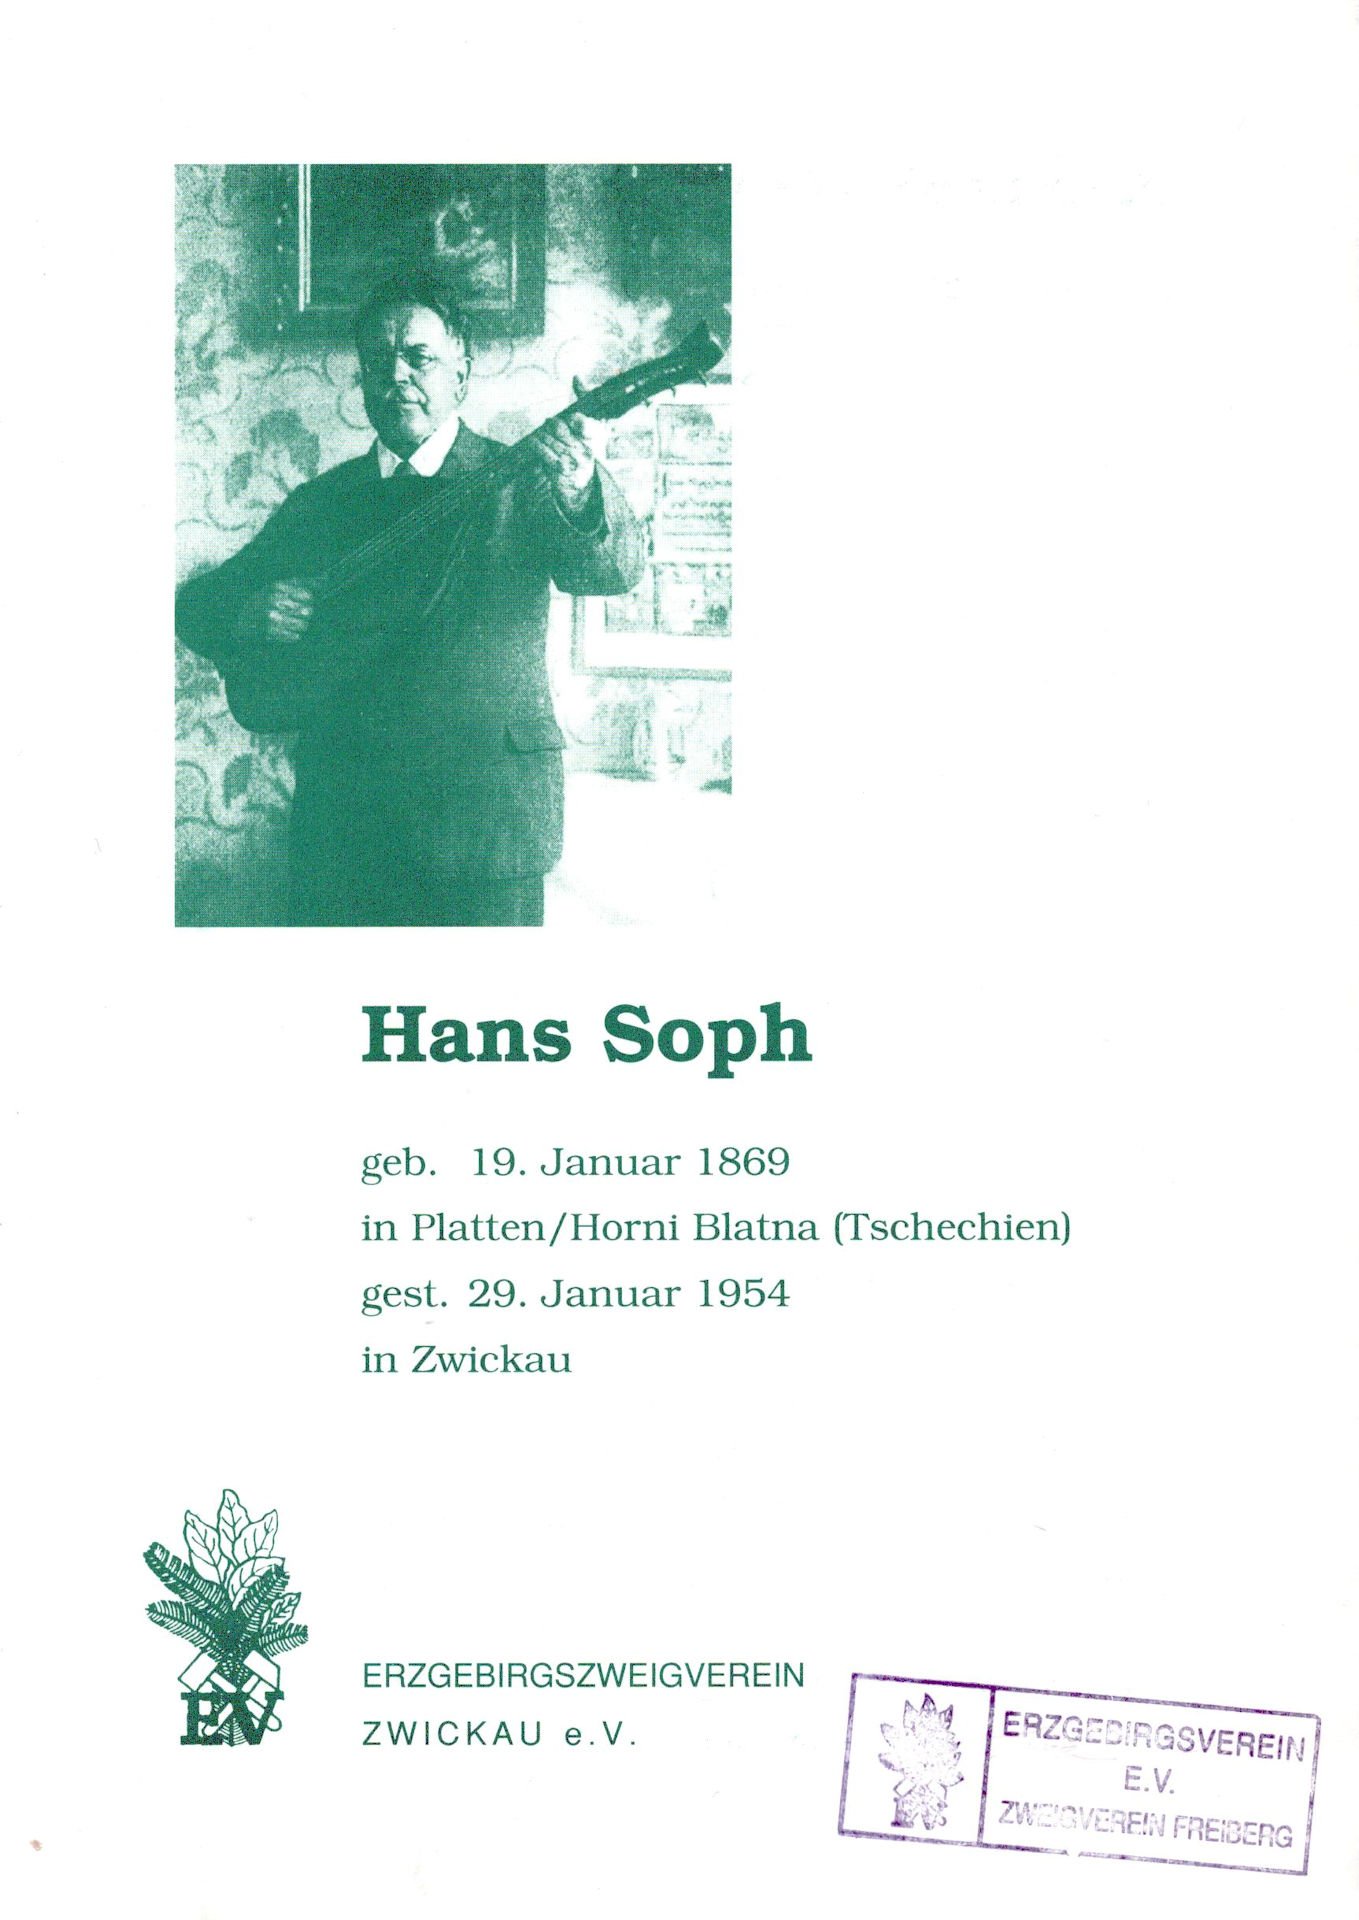 Hans Soph (Saxonia-Freiberg-Stiftung CC BY-NC-SA)